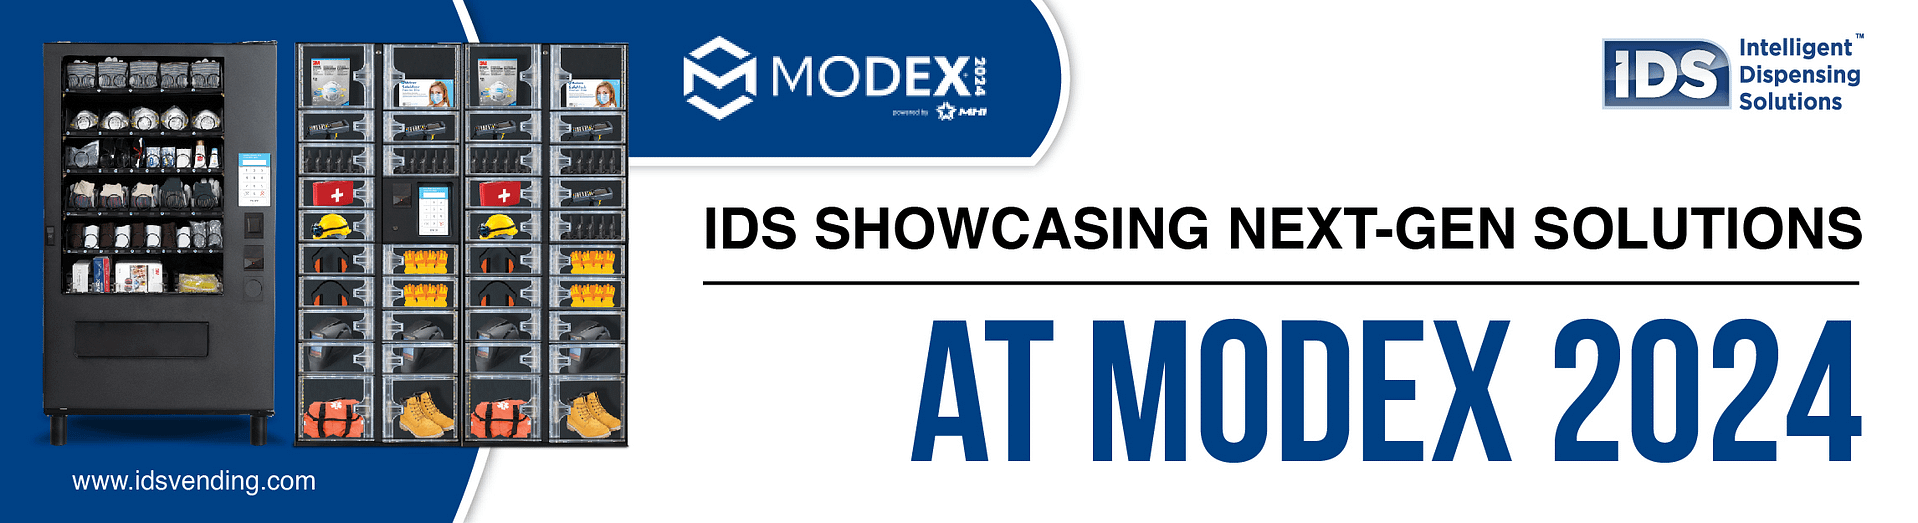 IDS MODEX 2024